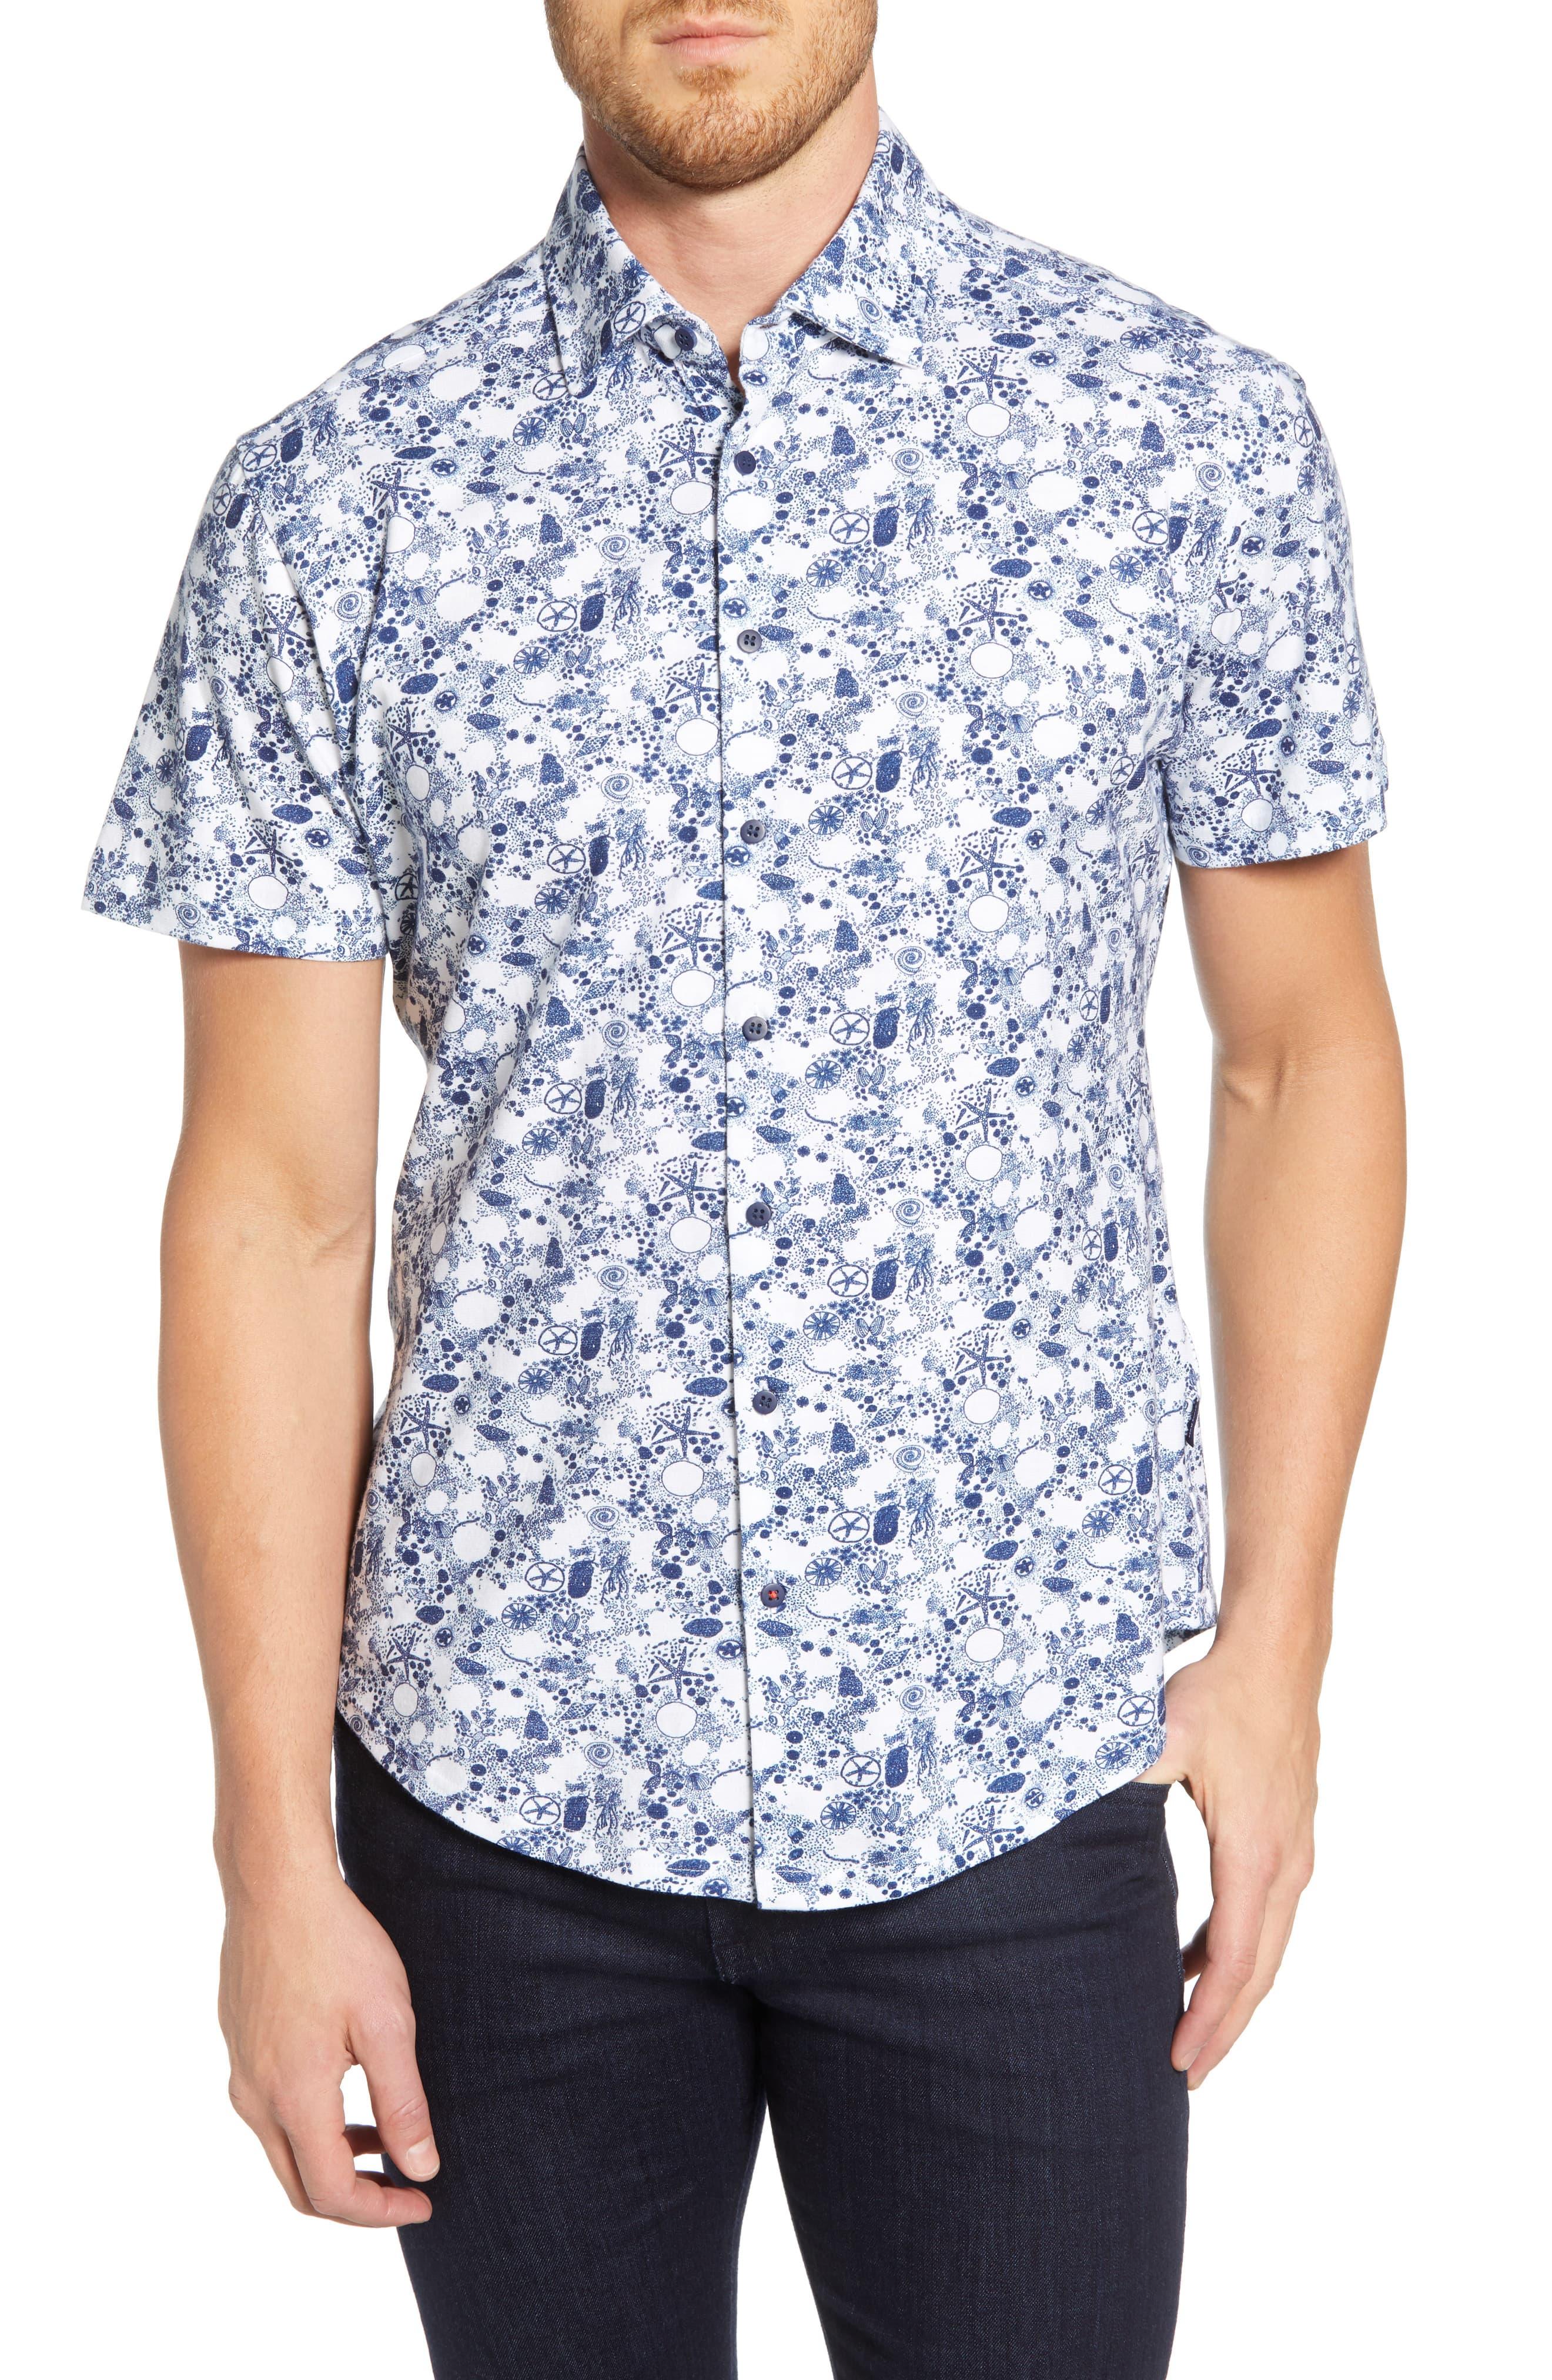 Stone Rose Shell Print Regular Fit Knit Sport Shirt in Blue for Men - Lyst